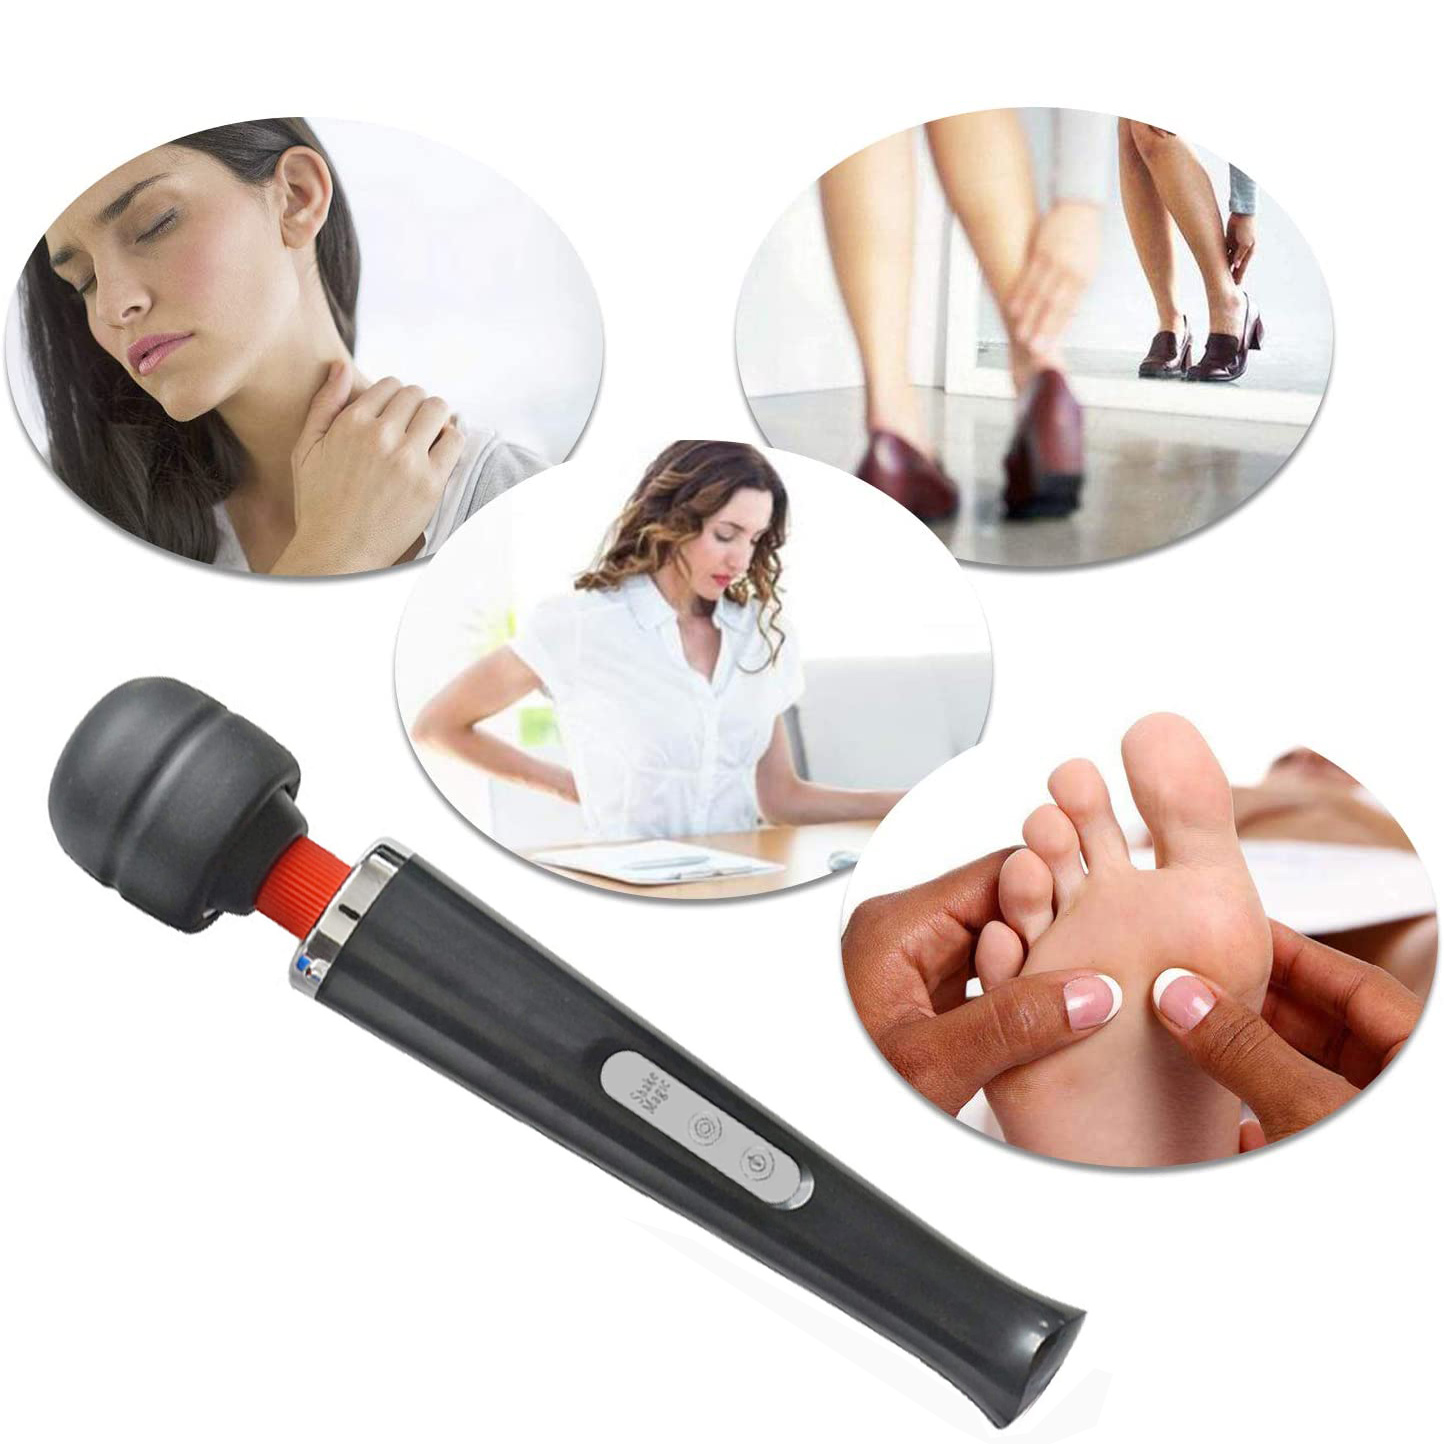 30 Speed Handheld Massager Wand Vibrating Clit Massage Magic Therapy 